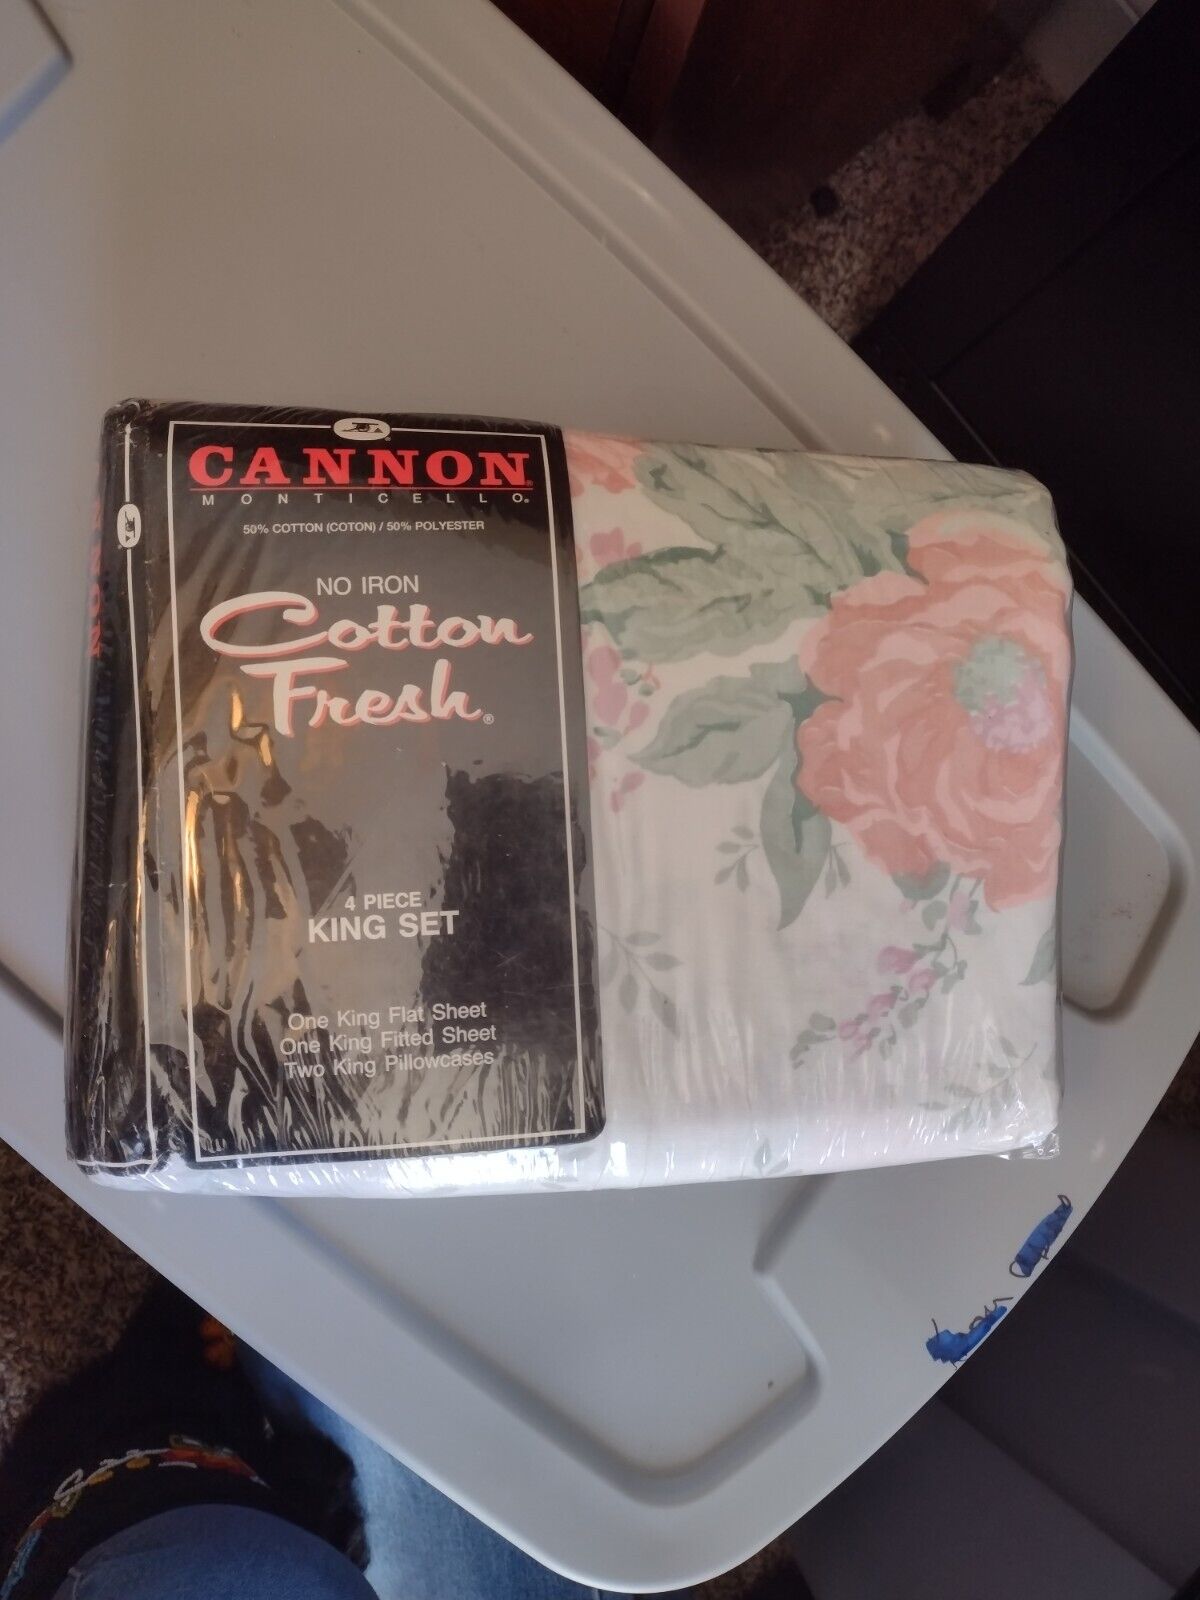 vtg Cannon Monticello KING 4 Piece Floral Sheet Set no iron cotton fresh